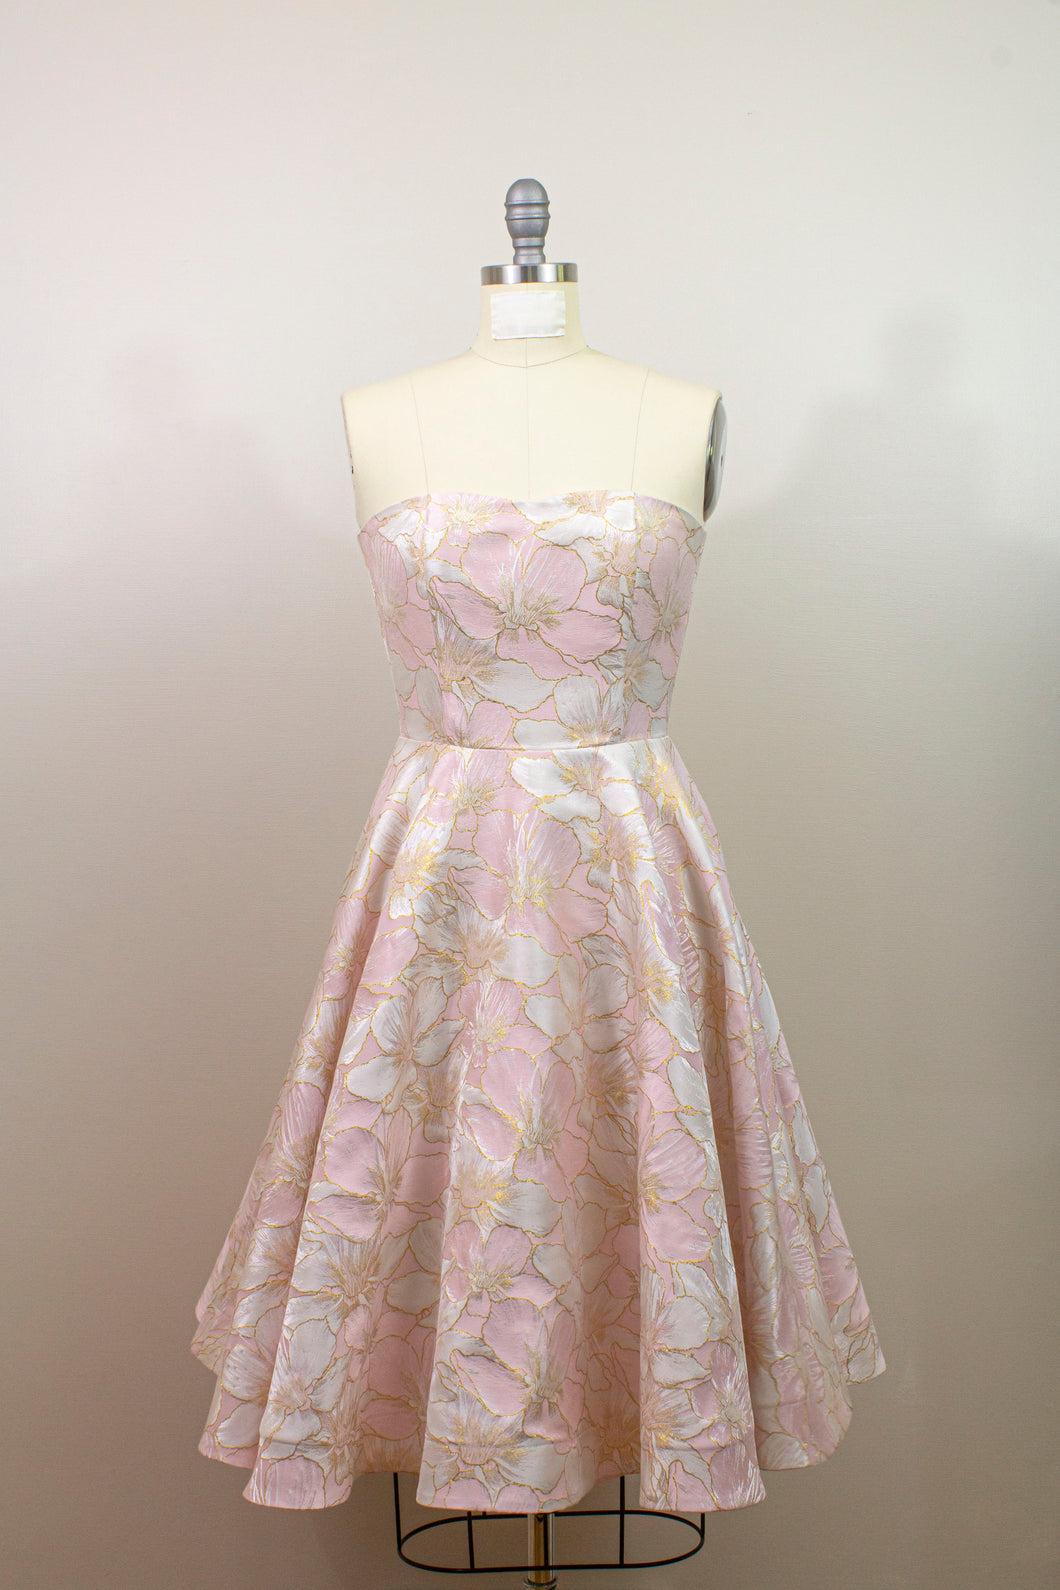 Flora pale pink floral brocade dress